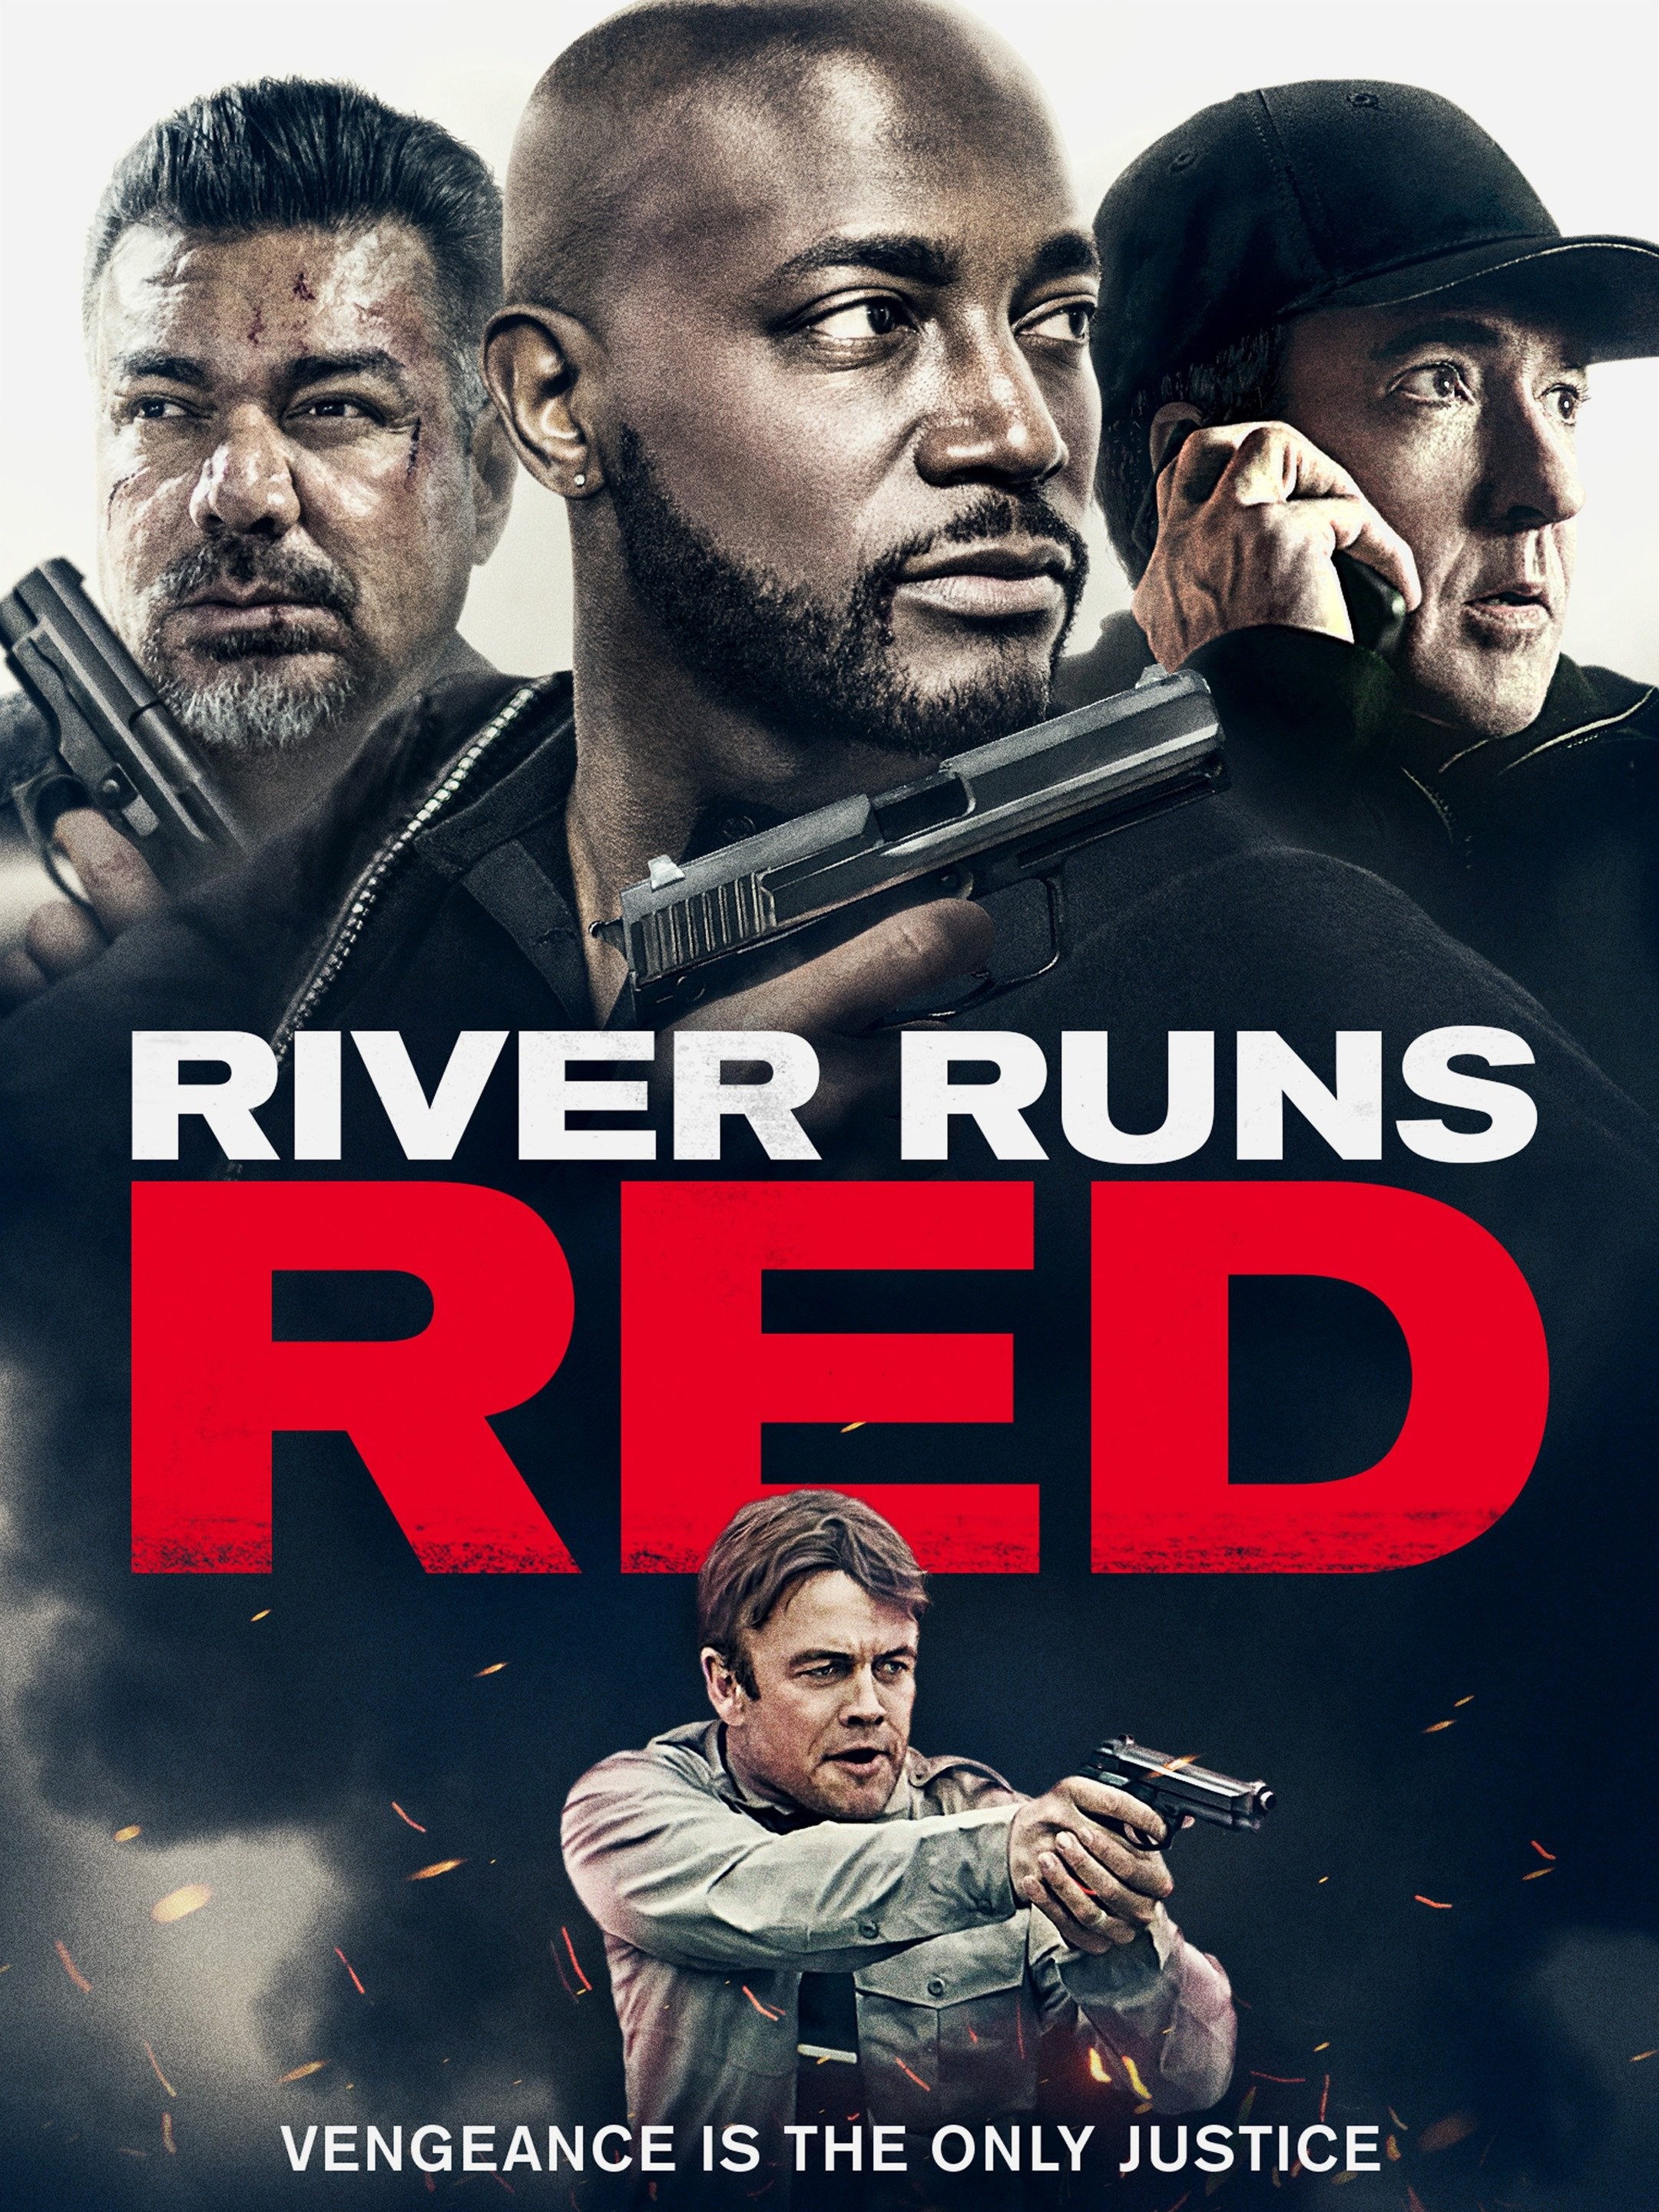 The River Runs Red (2010) - IMDb